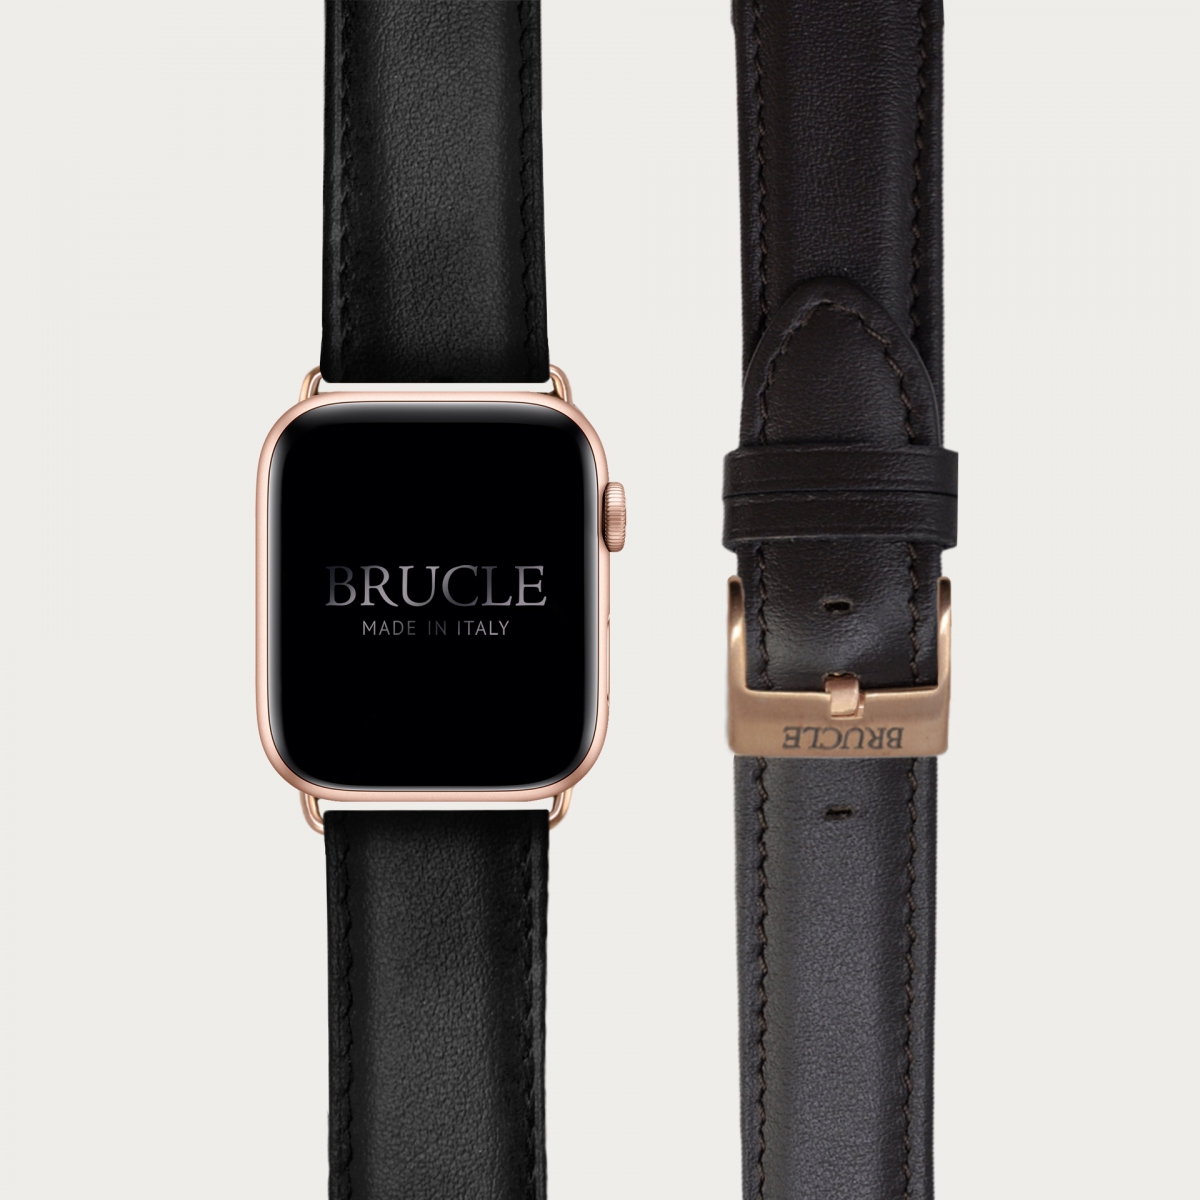 Cinturino compatibile con smartwatch Apple Watch / Samsung, nero